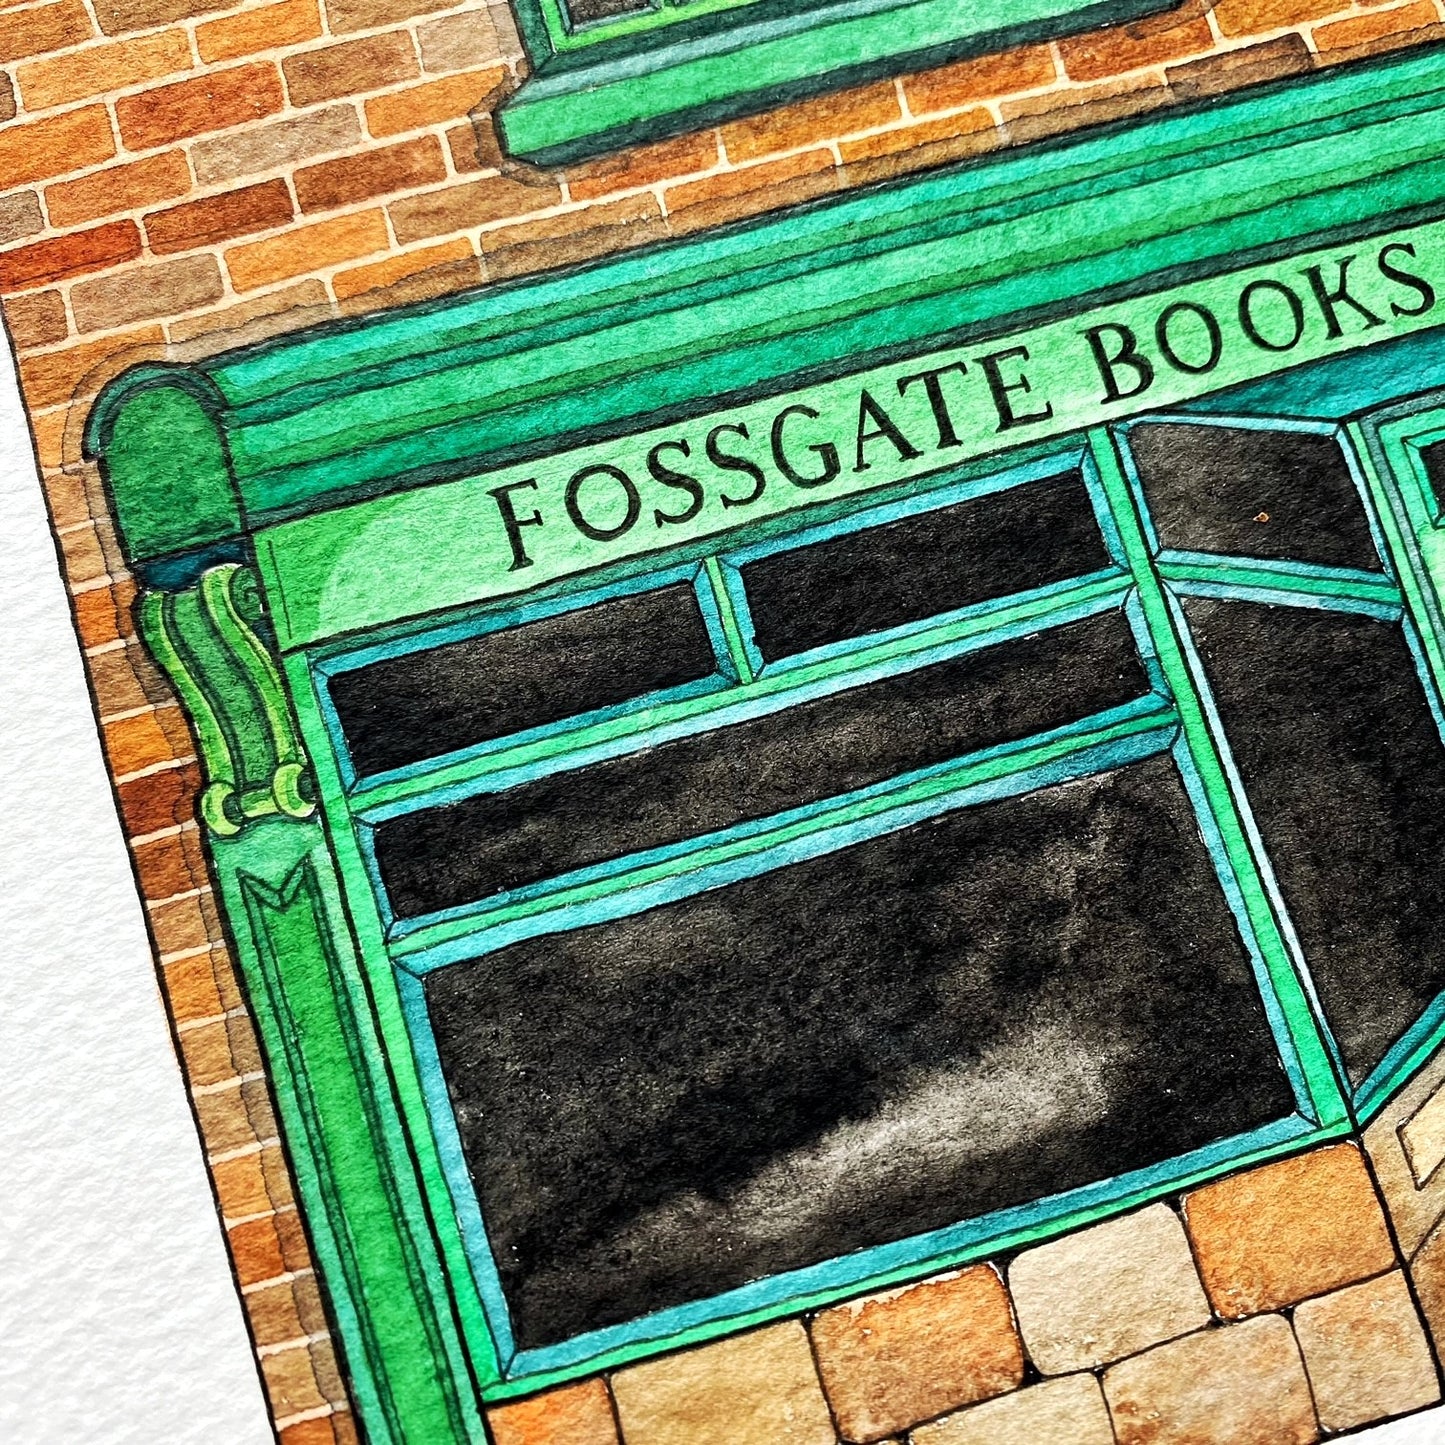 Fossgate Books Watercolour Print